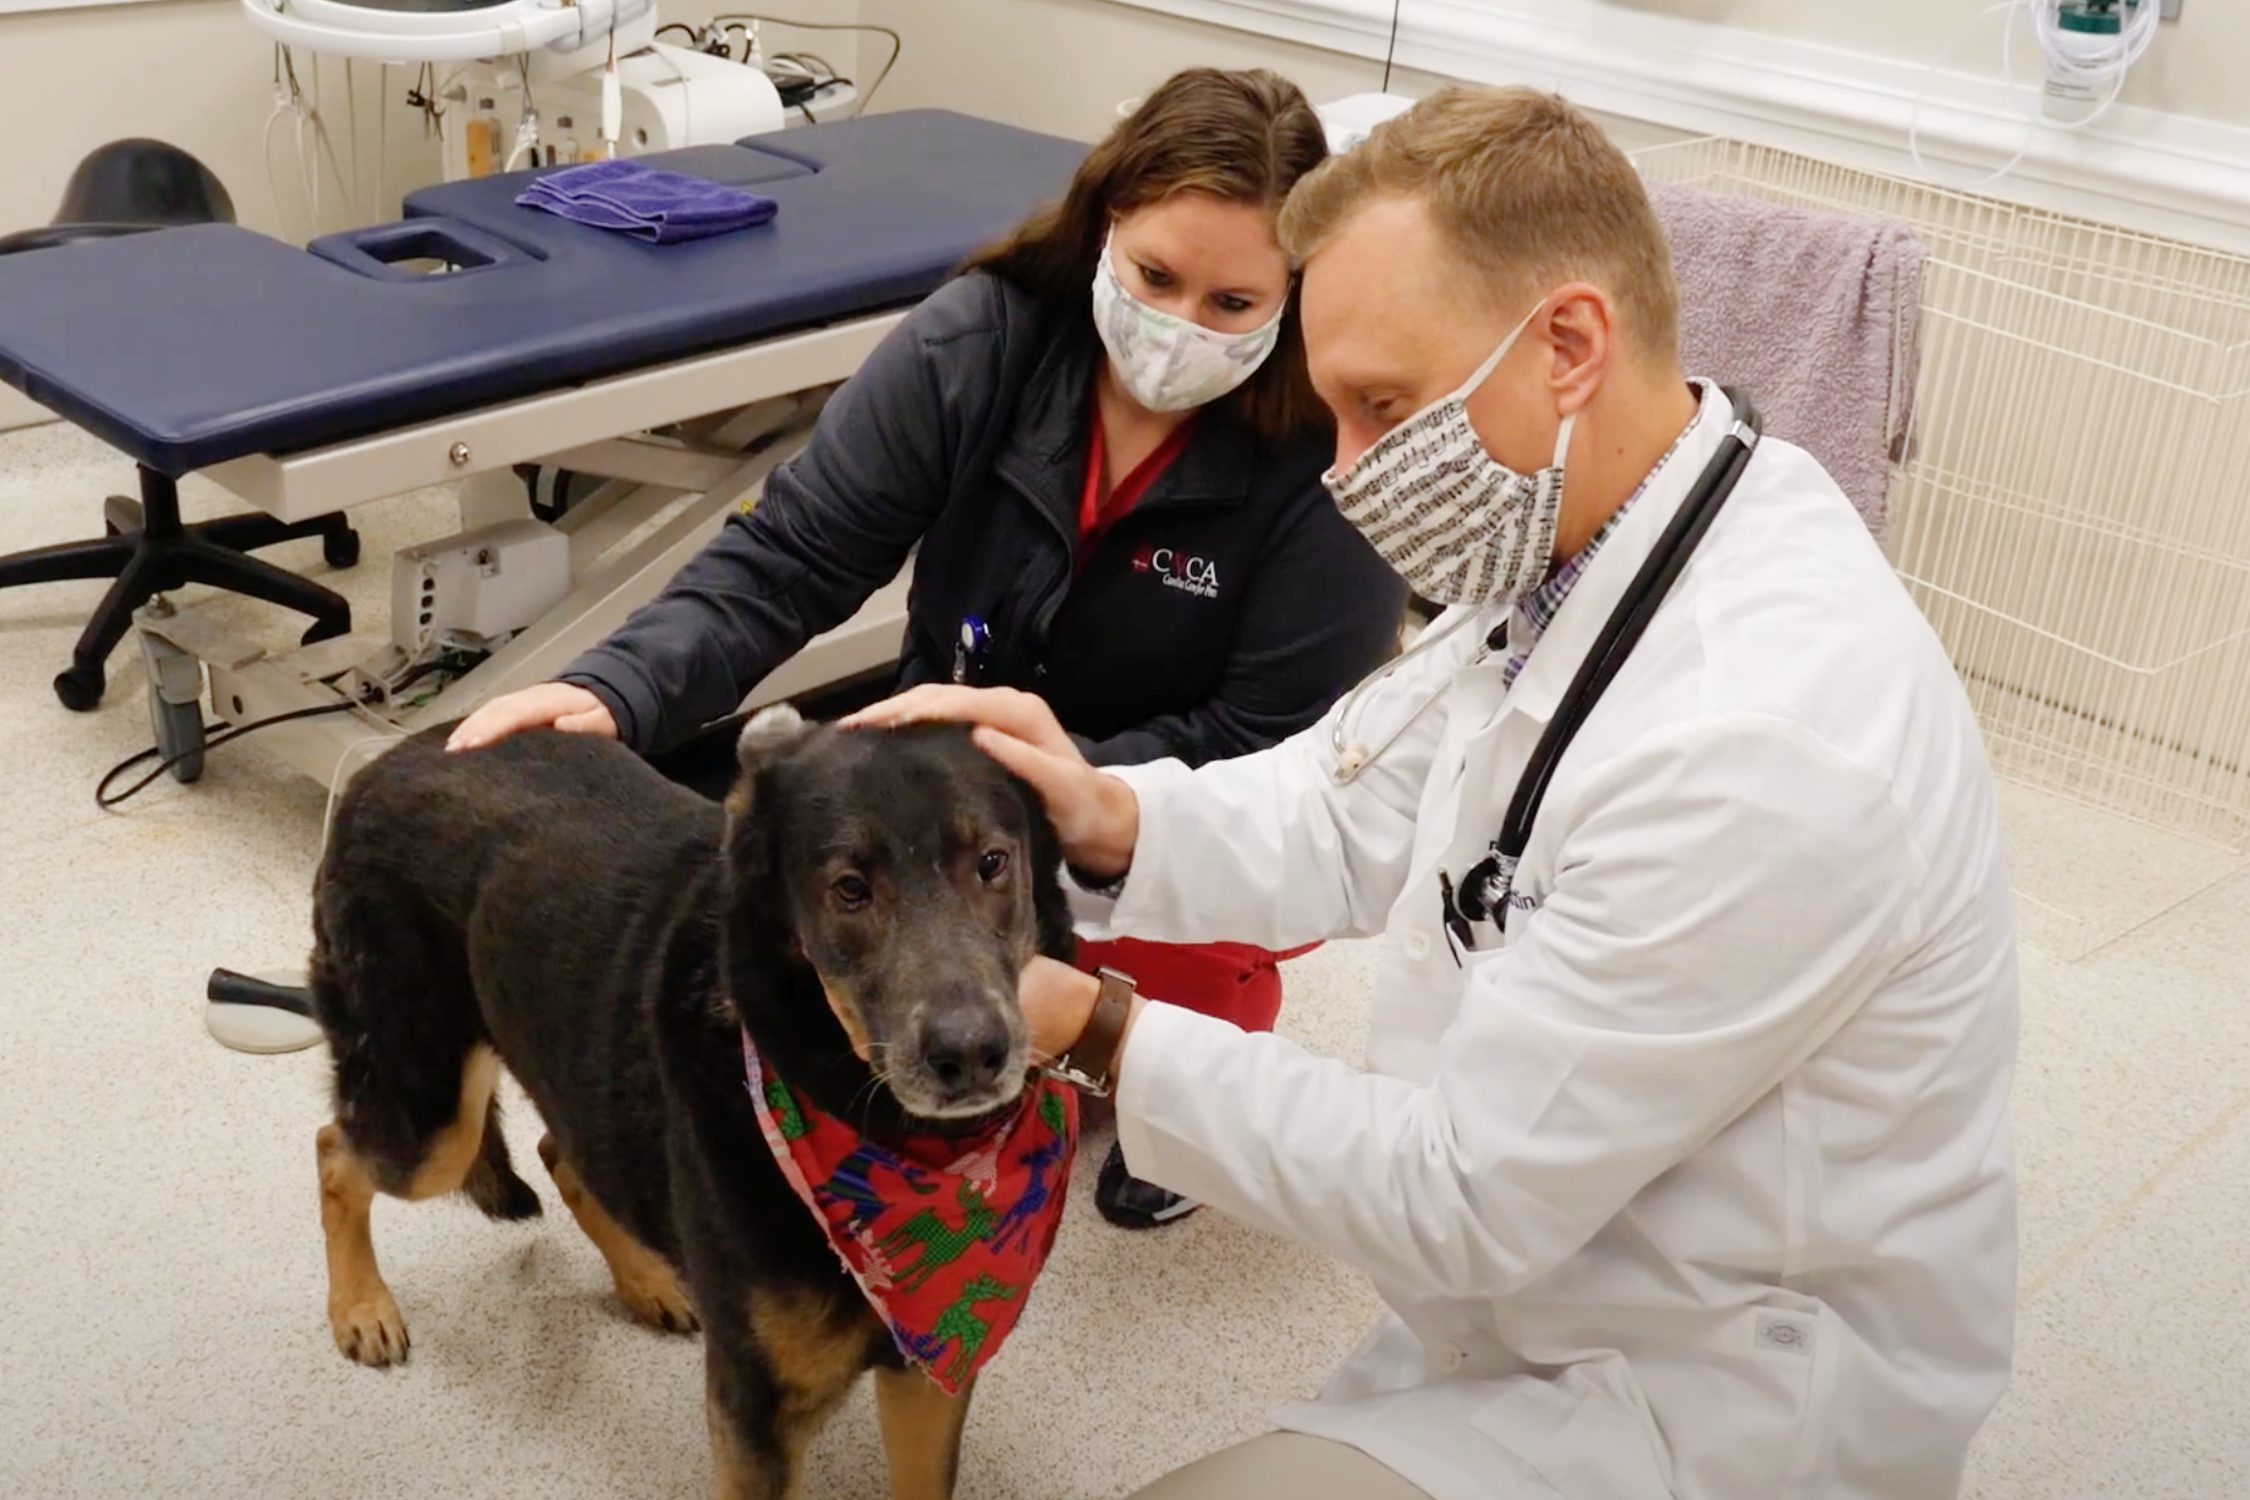 CVCA team member and vet cardiologist pet and examine dog